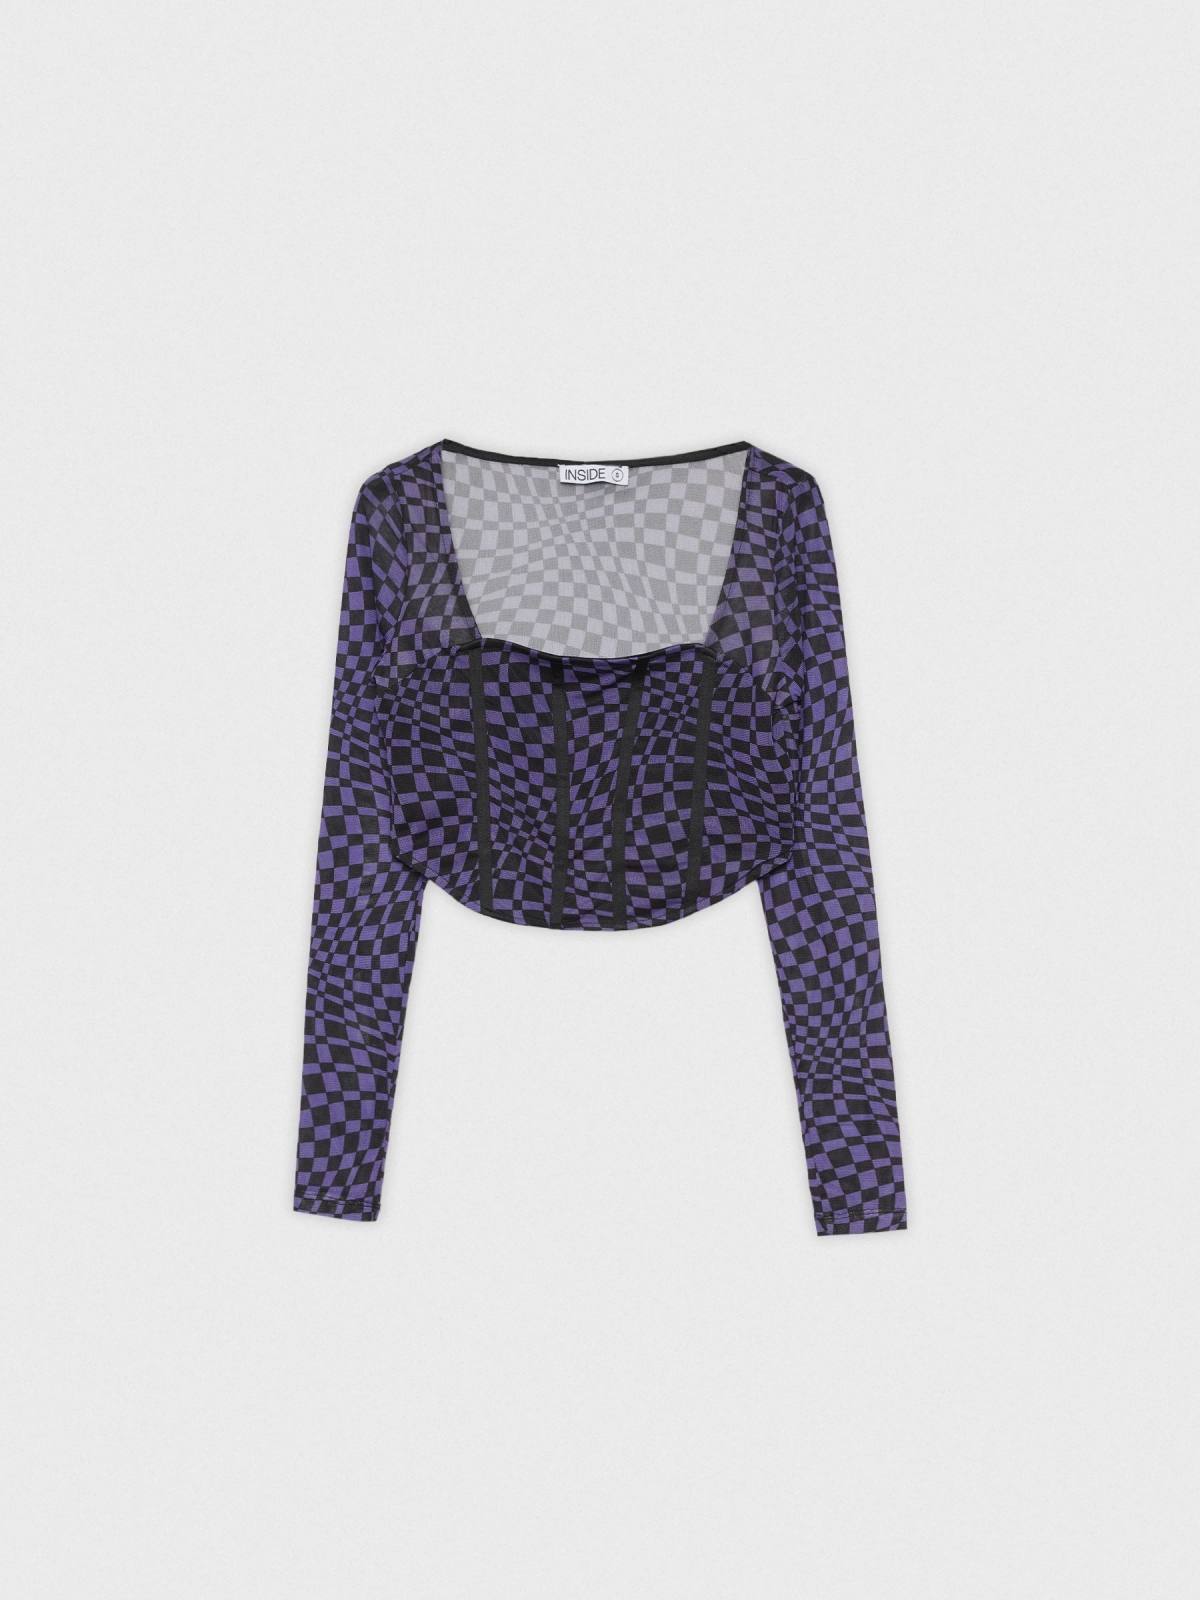  Camiseta crop print mesh violeta